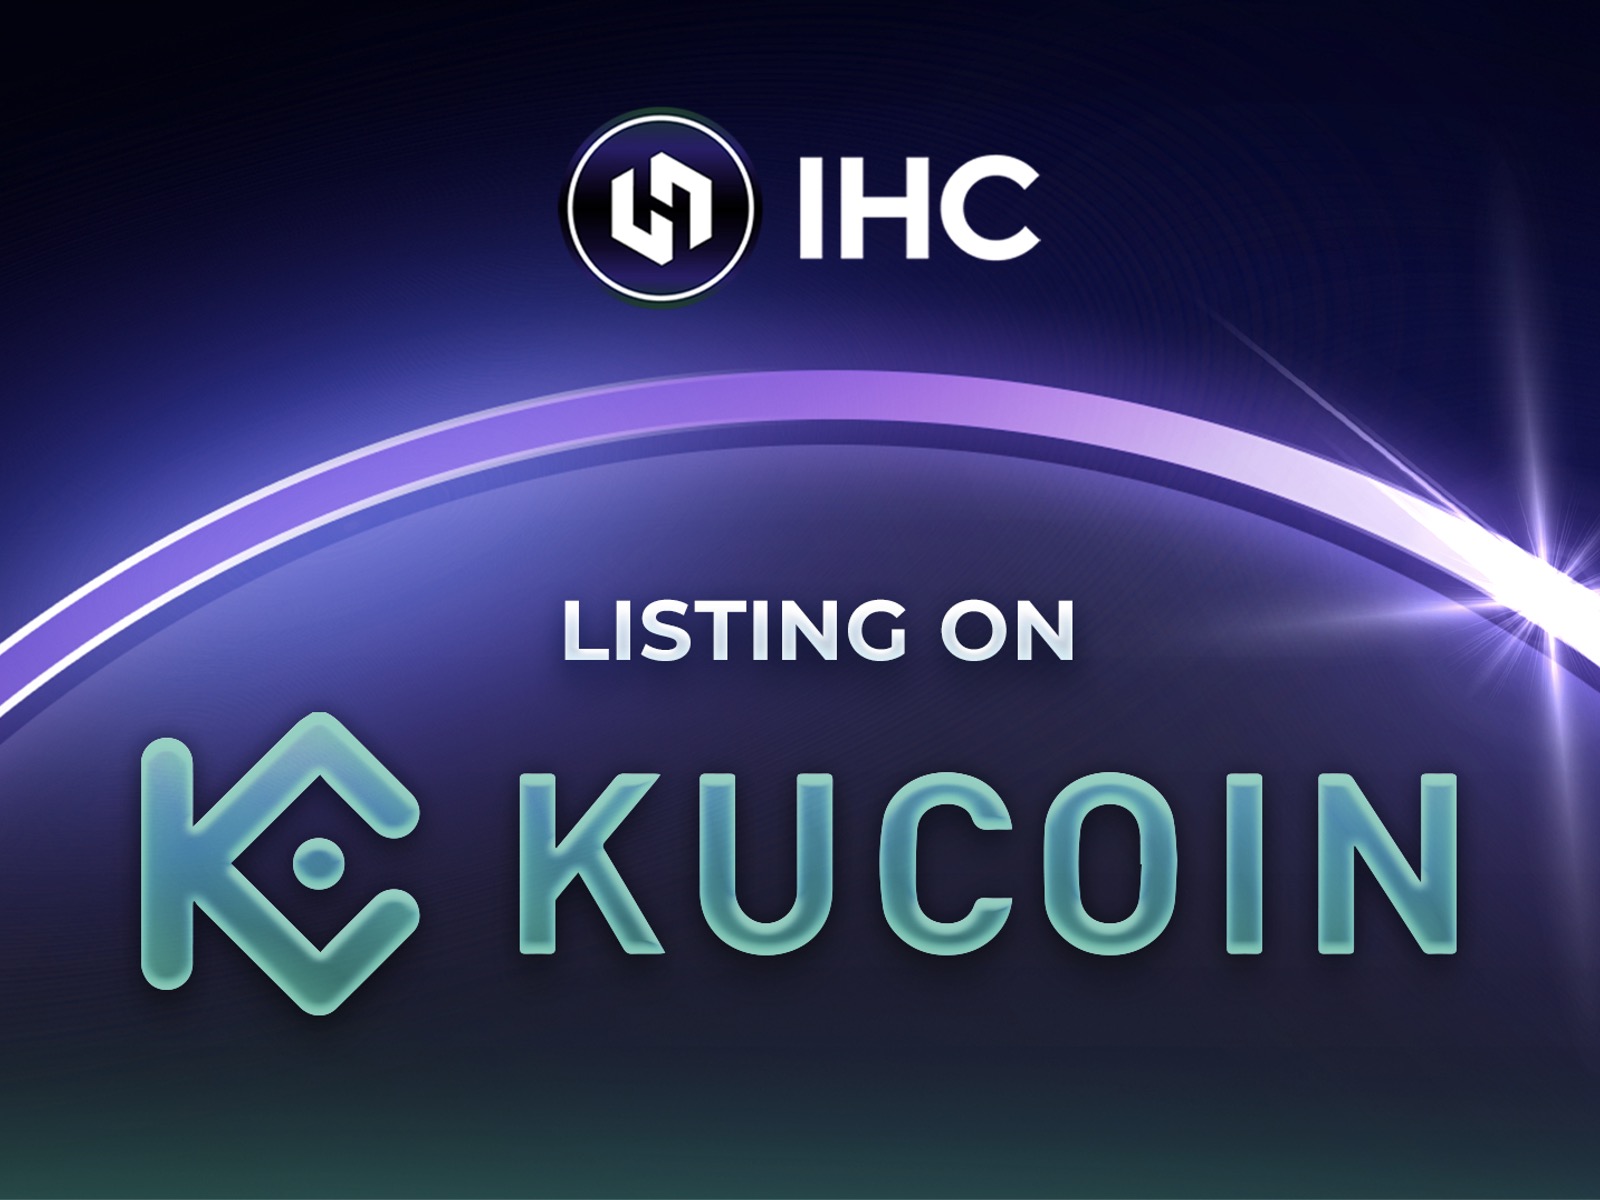 IHC's KuCoin Listing Celebrated in Mongolia